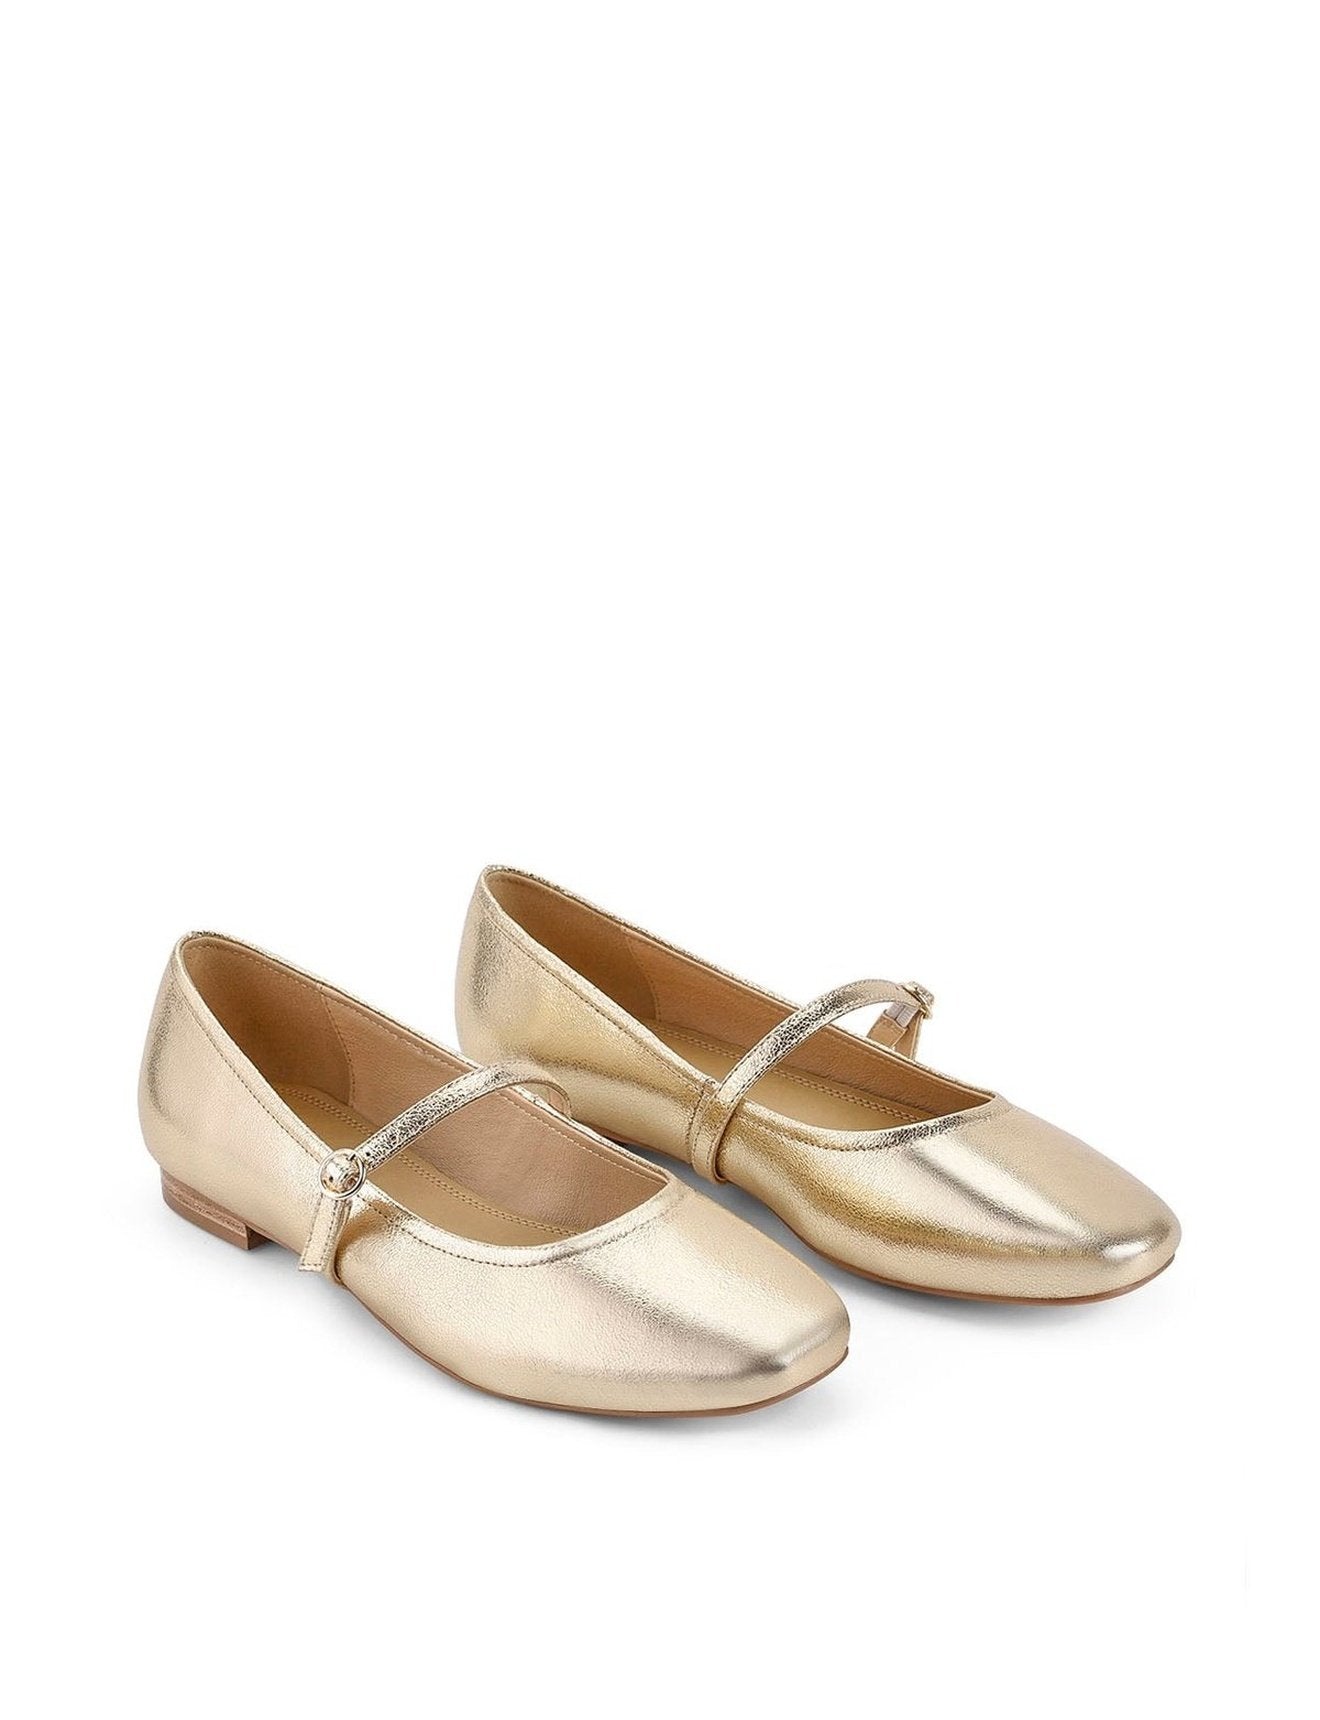 Rey Mary Jane Ballet - Gold Metallic Leather